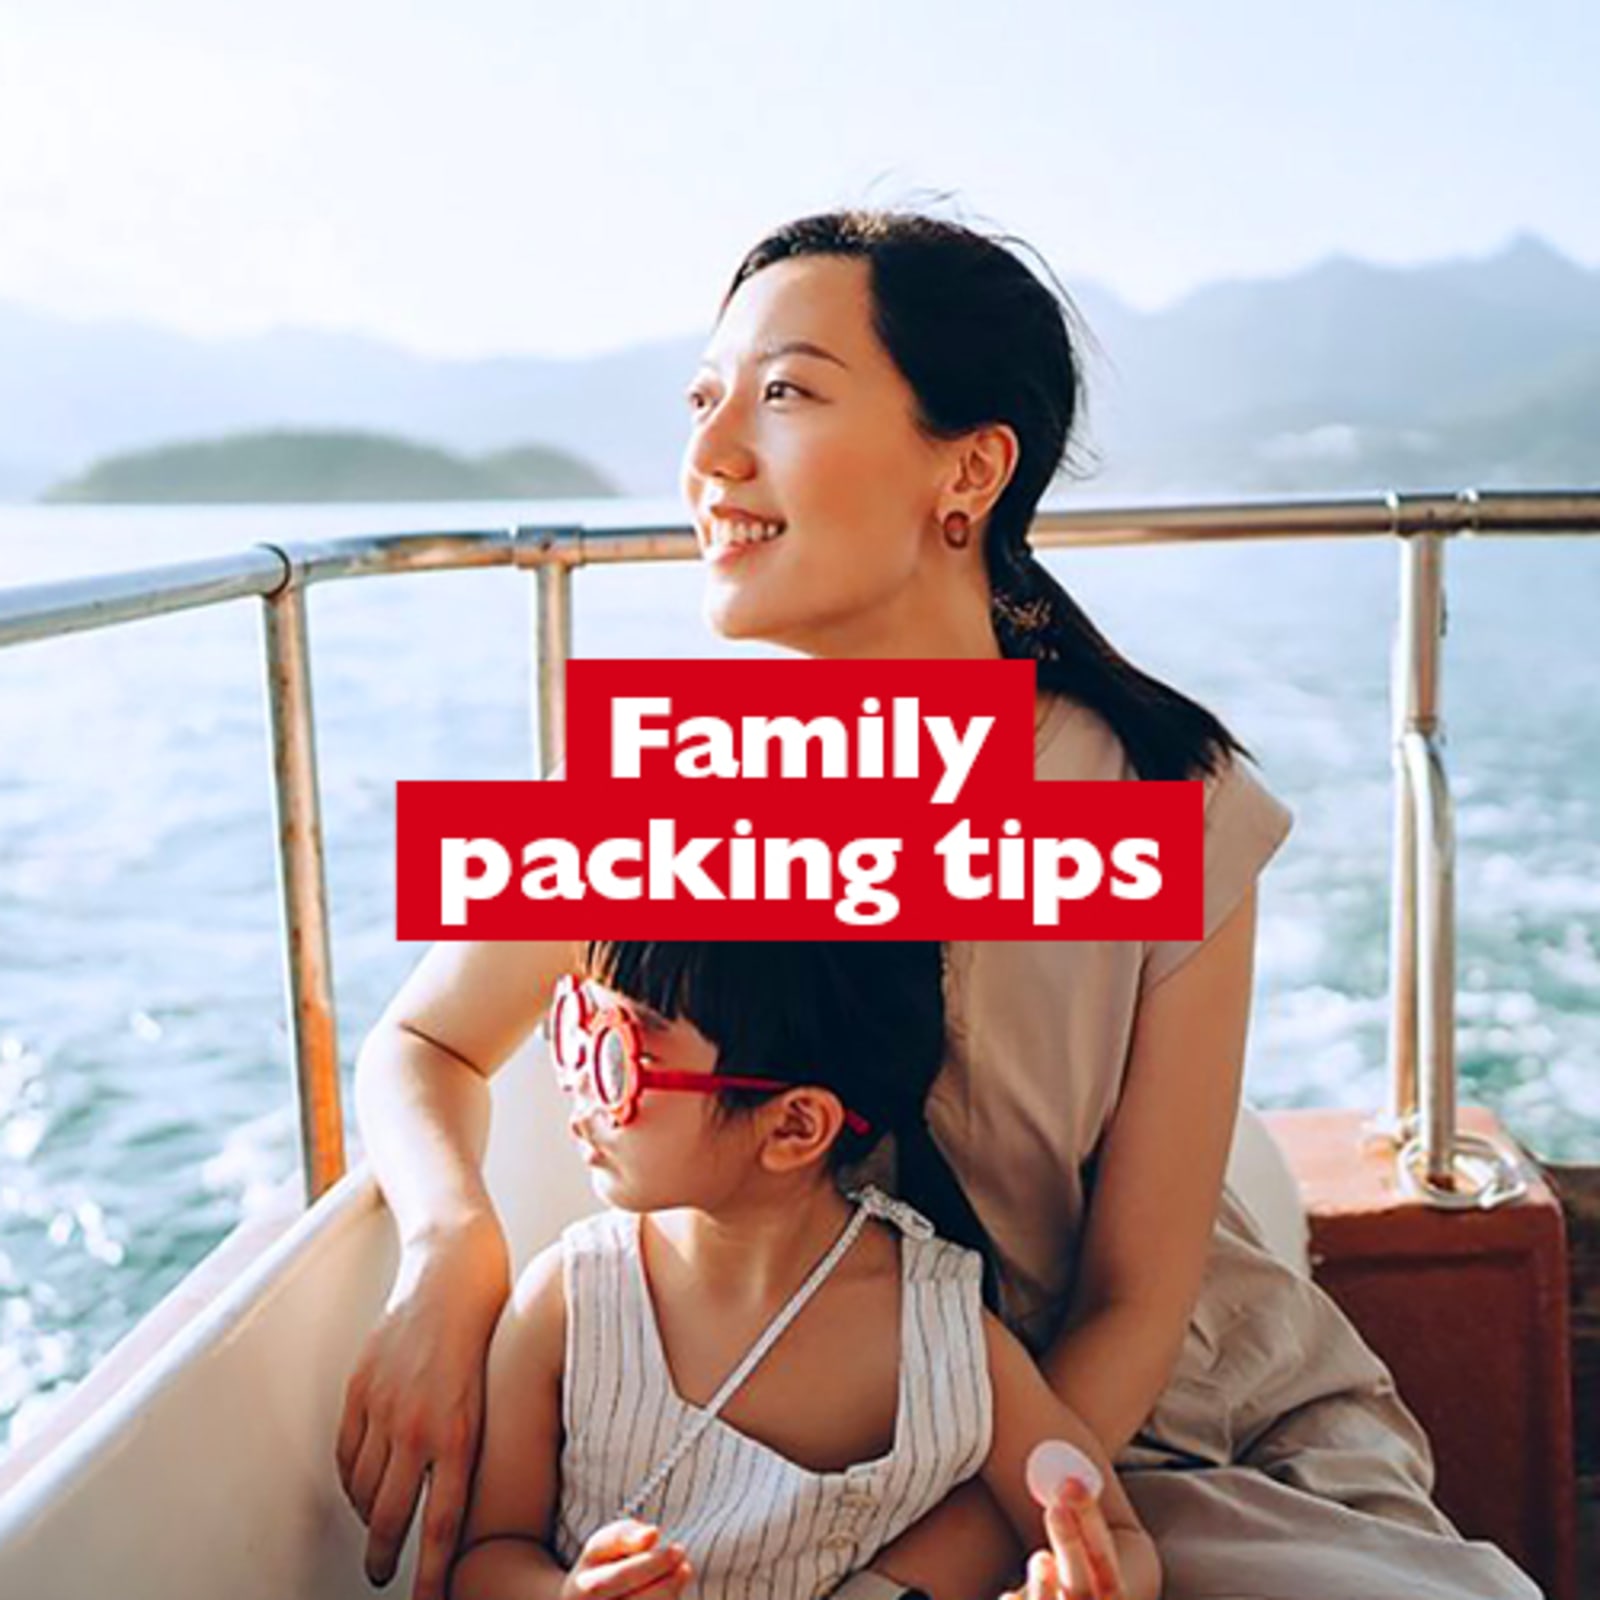 Family packing tips